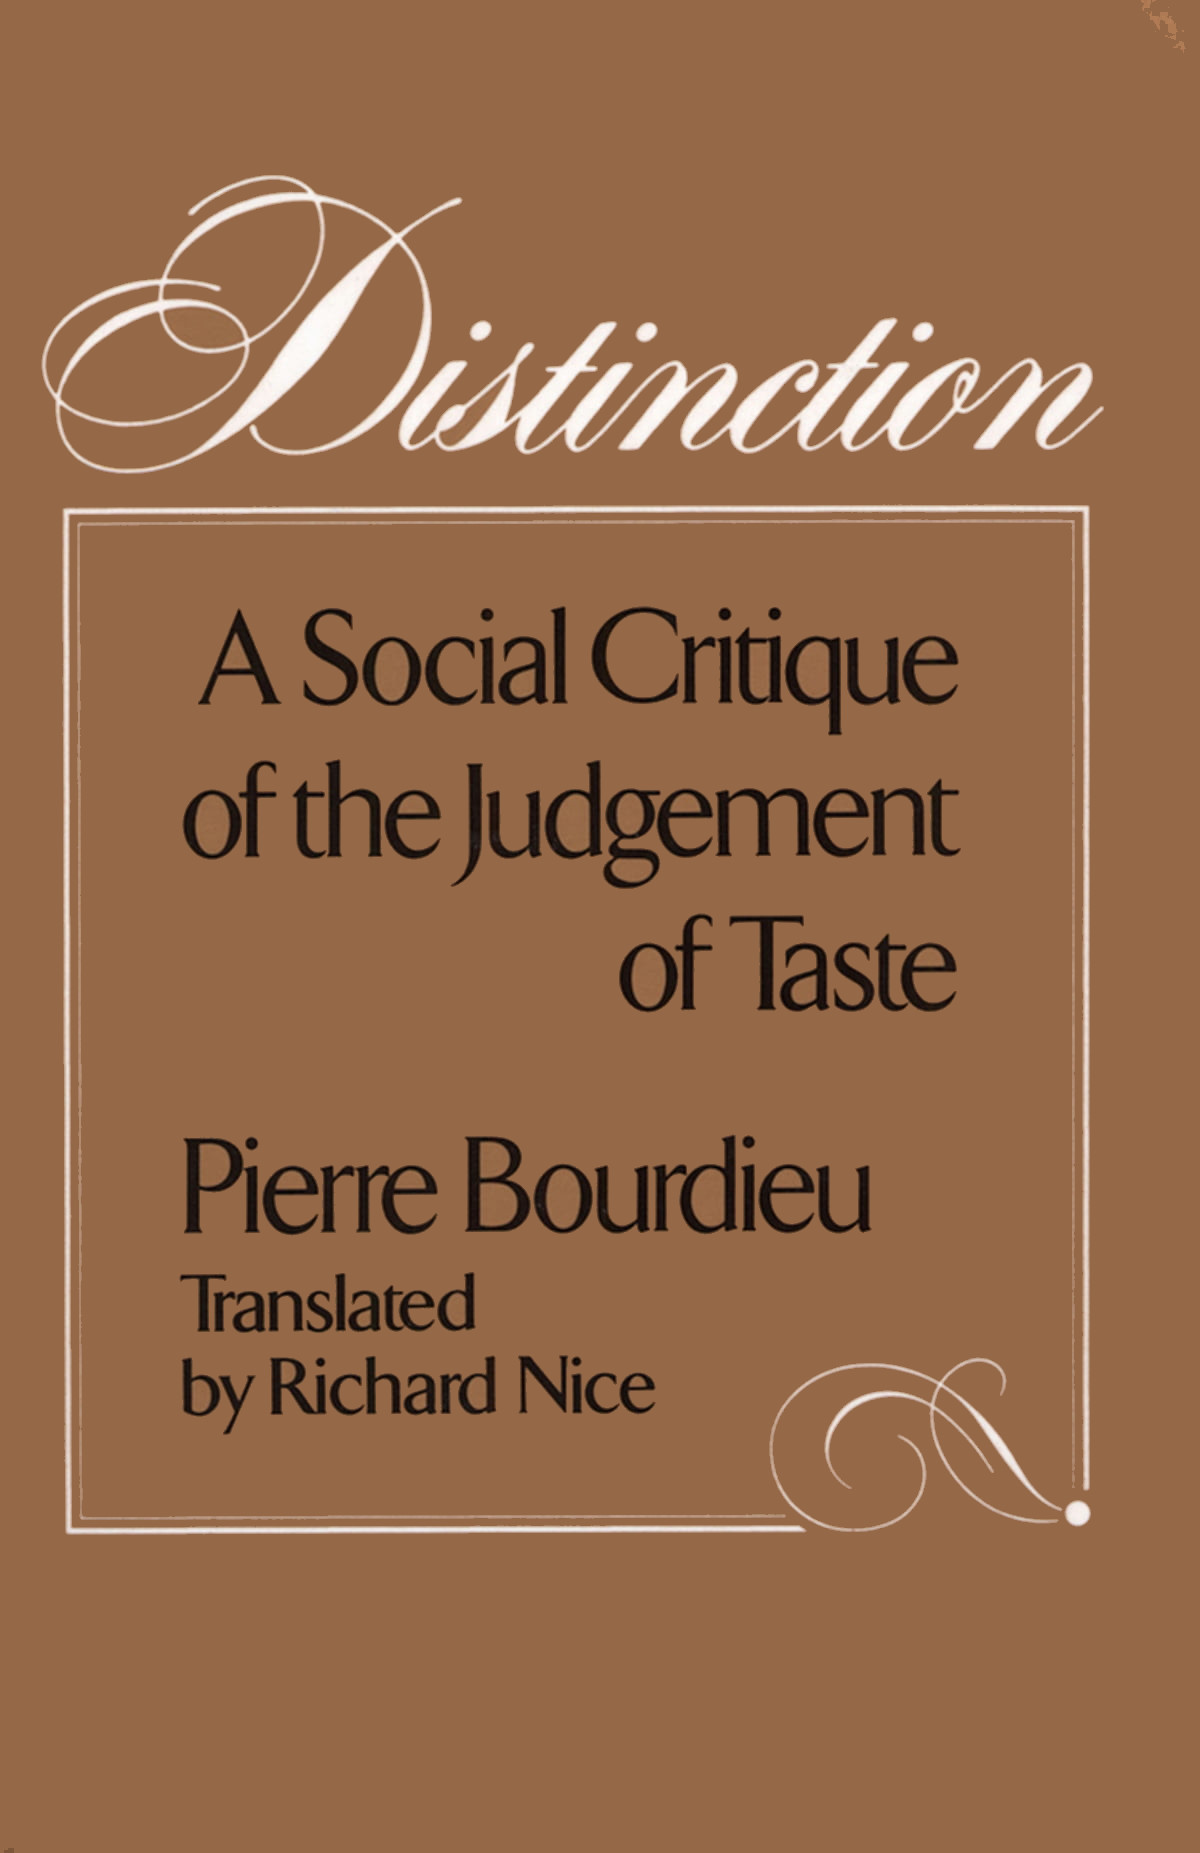 pierre bourdieu Distinction download book pdf